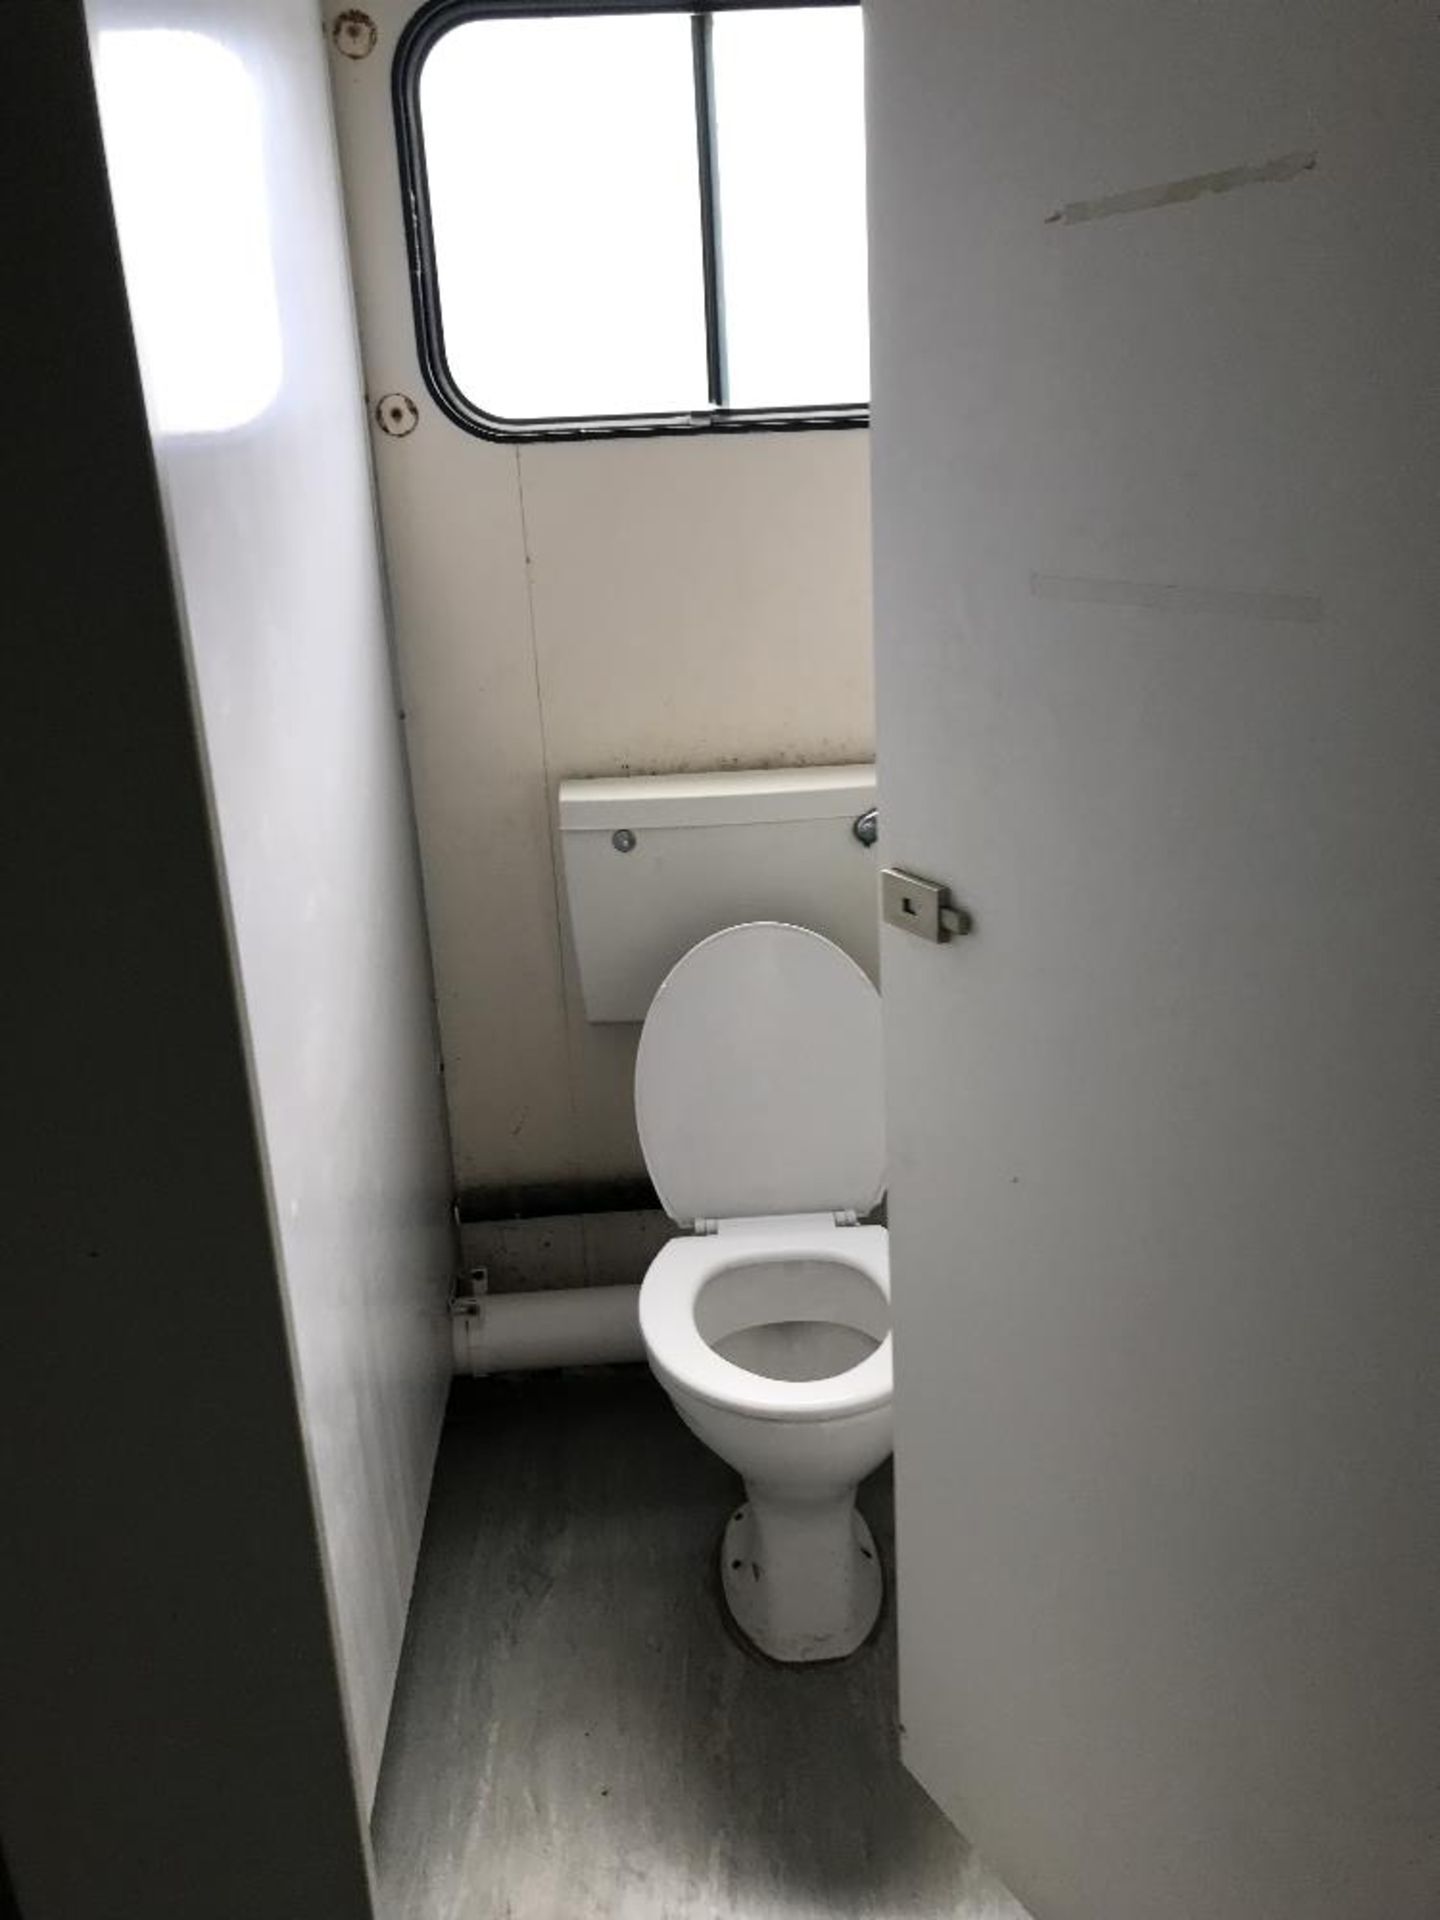 Portacabin jack legged staff toilet unit - Bild 8 aus 12